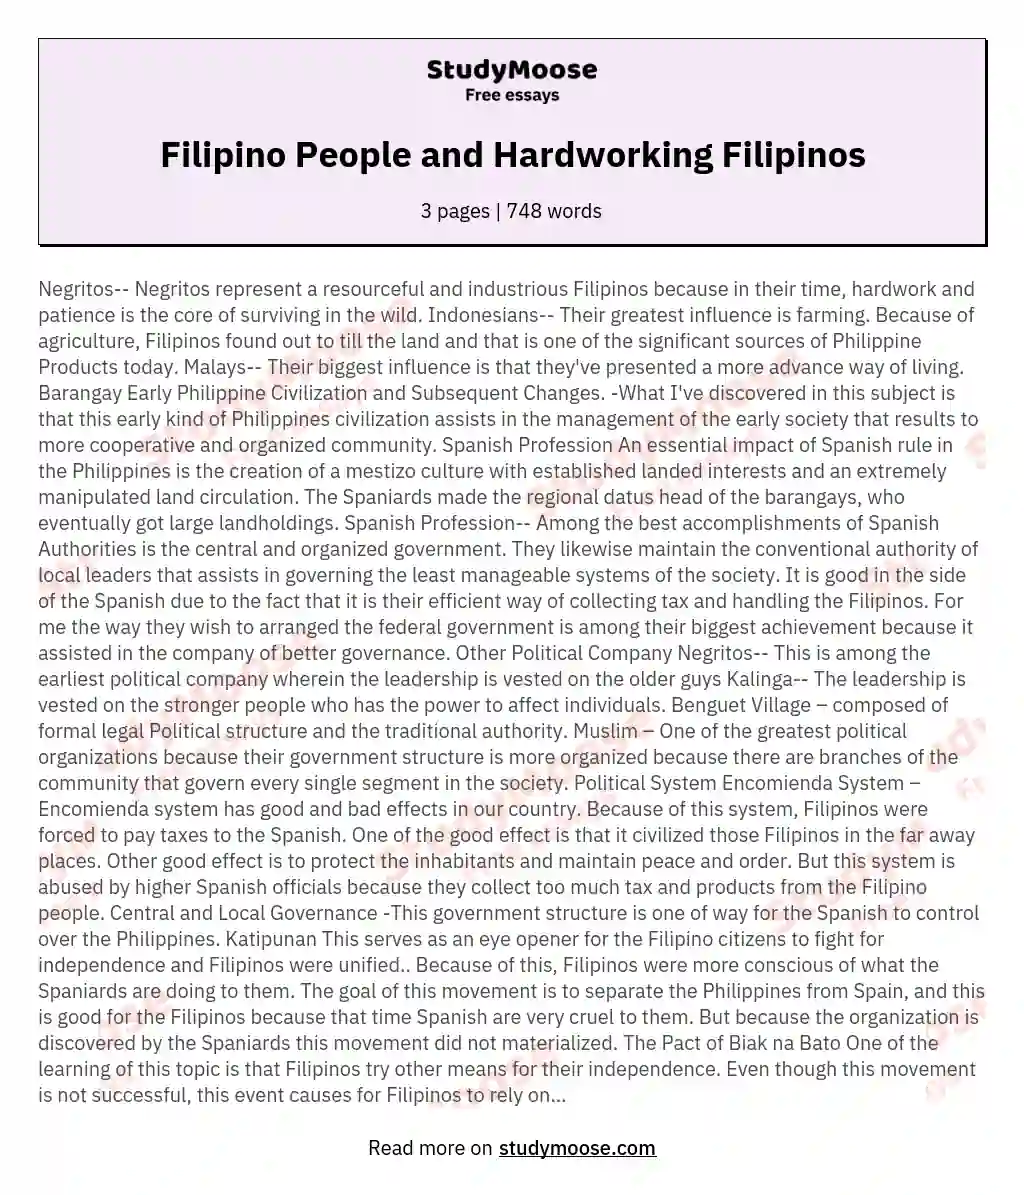 Filipino People and Hardworking Filipinos essay